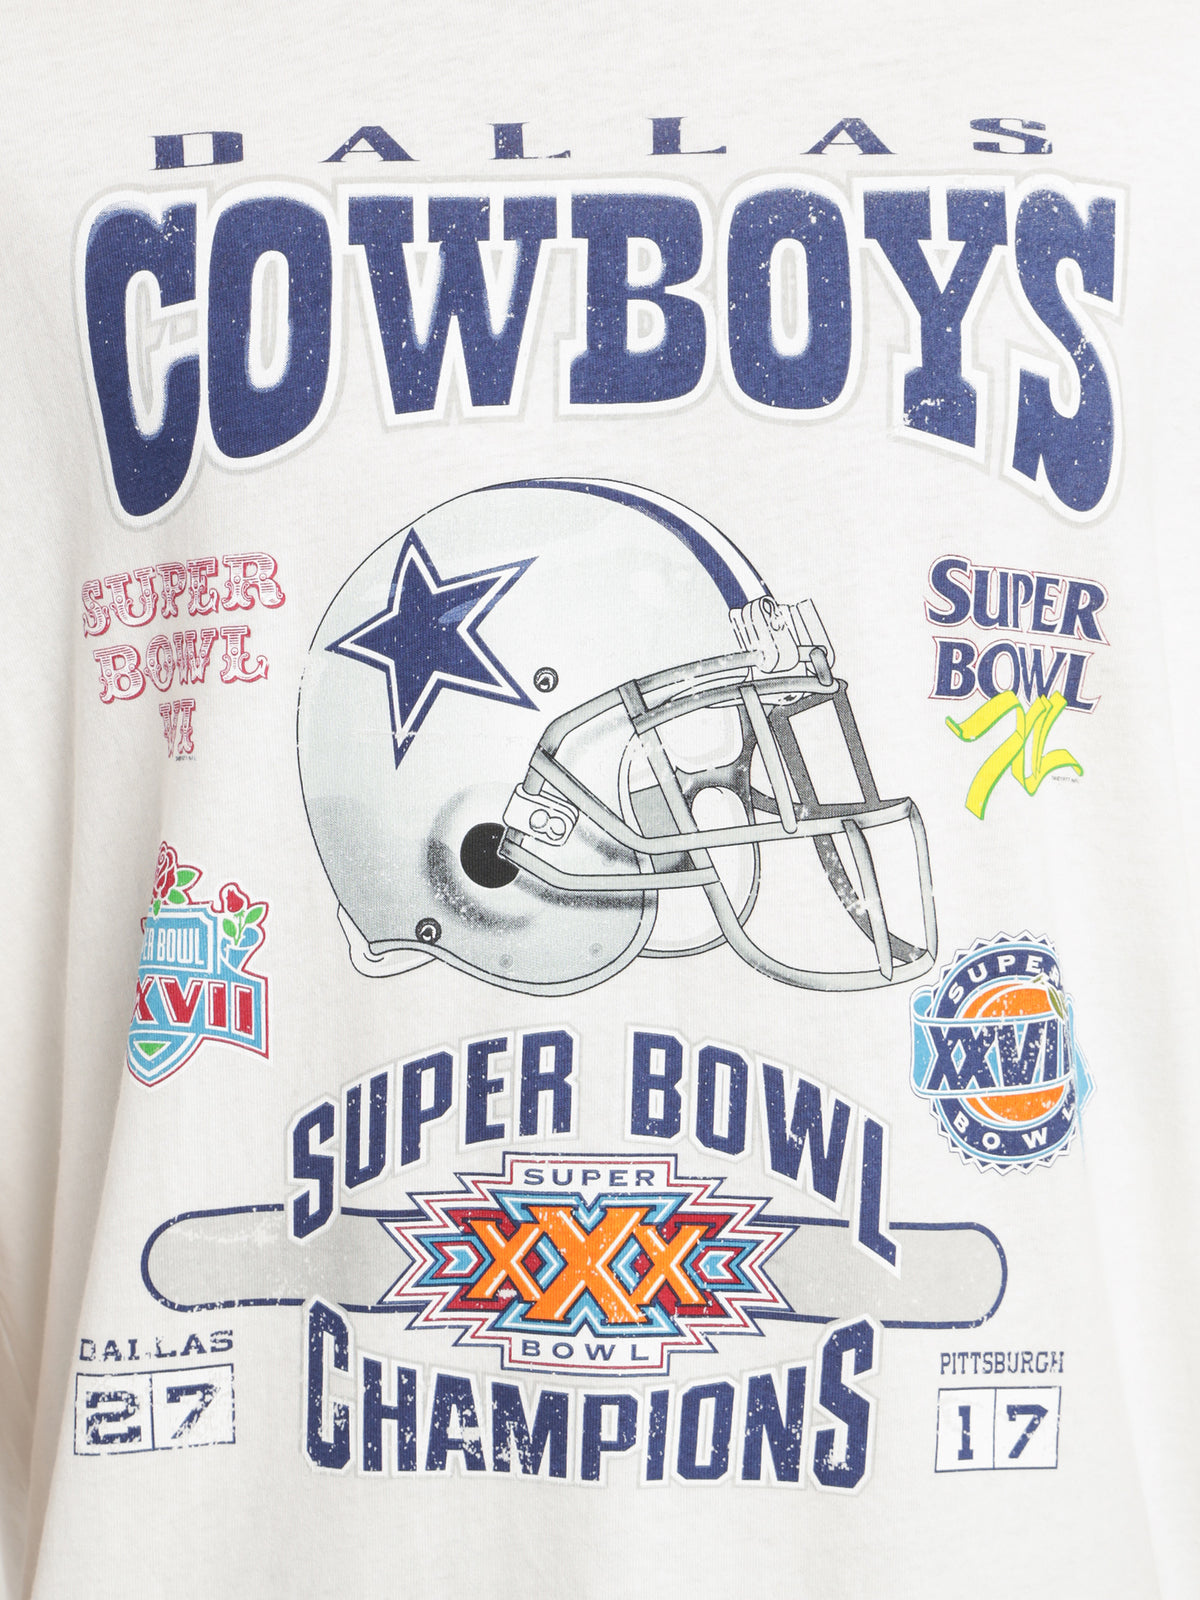 5 X Superbowl Champ Cowboys T-Shirt in Vintage White